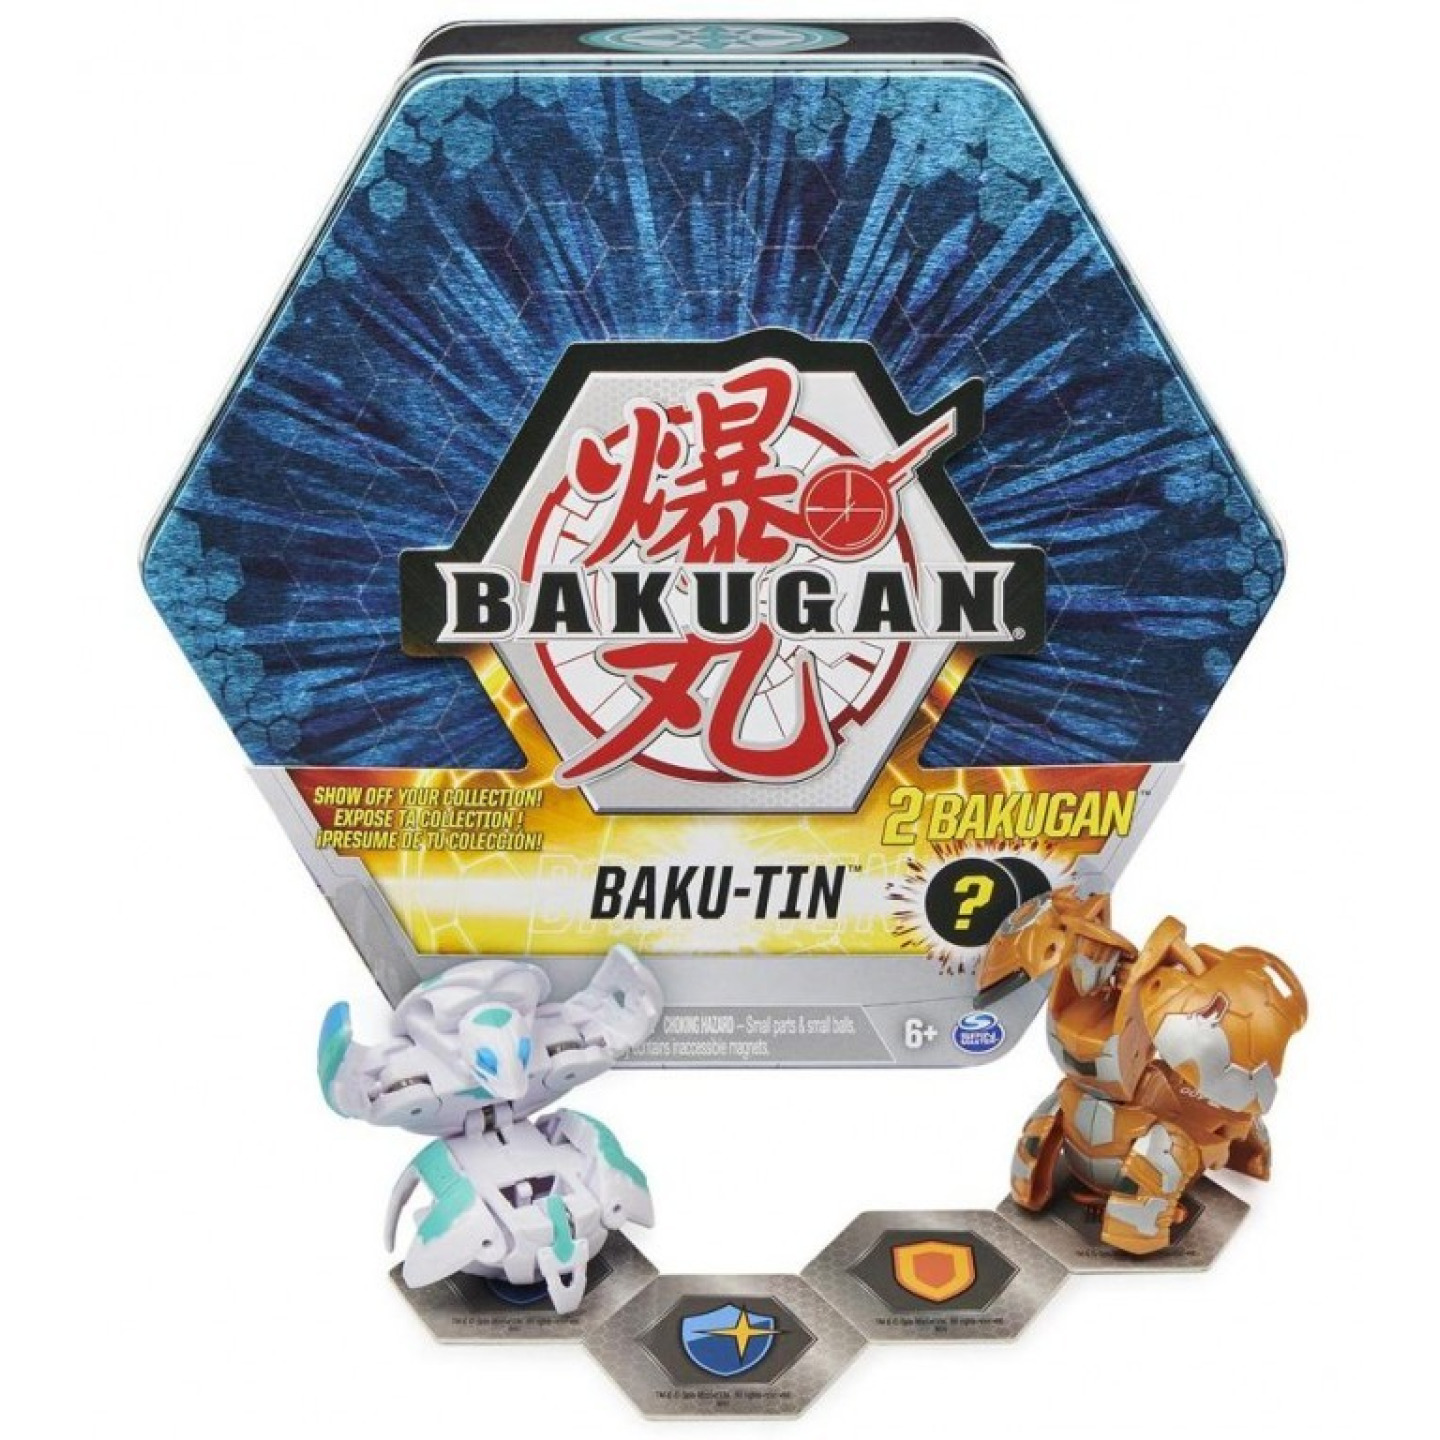 Bakugan Plechový box s exkluzivním Bakuganem S3, modý